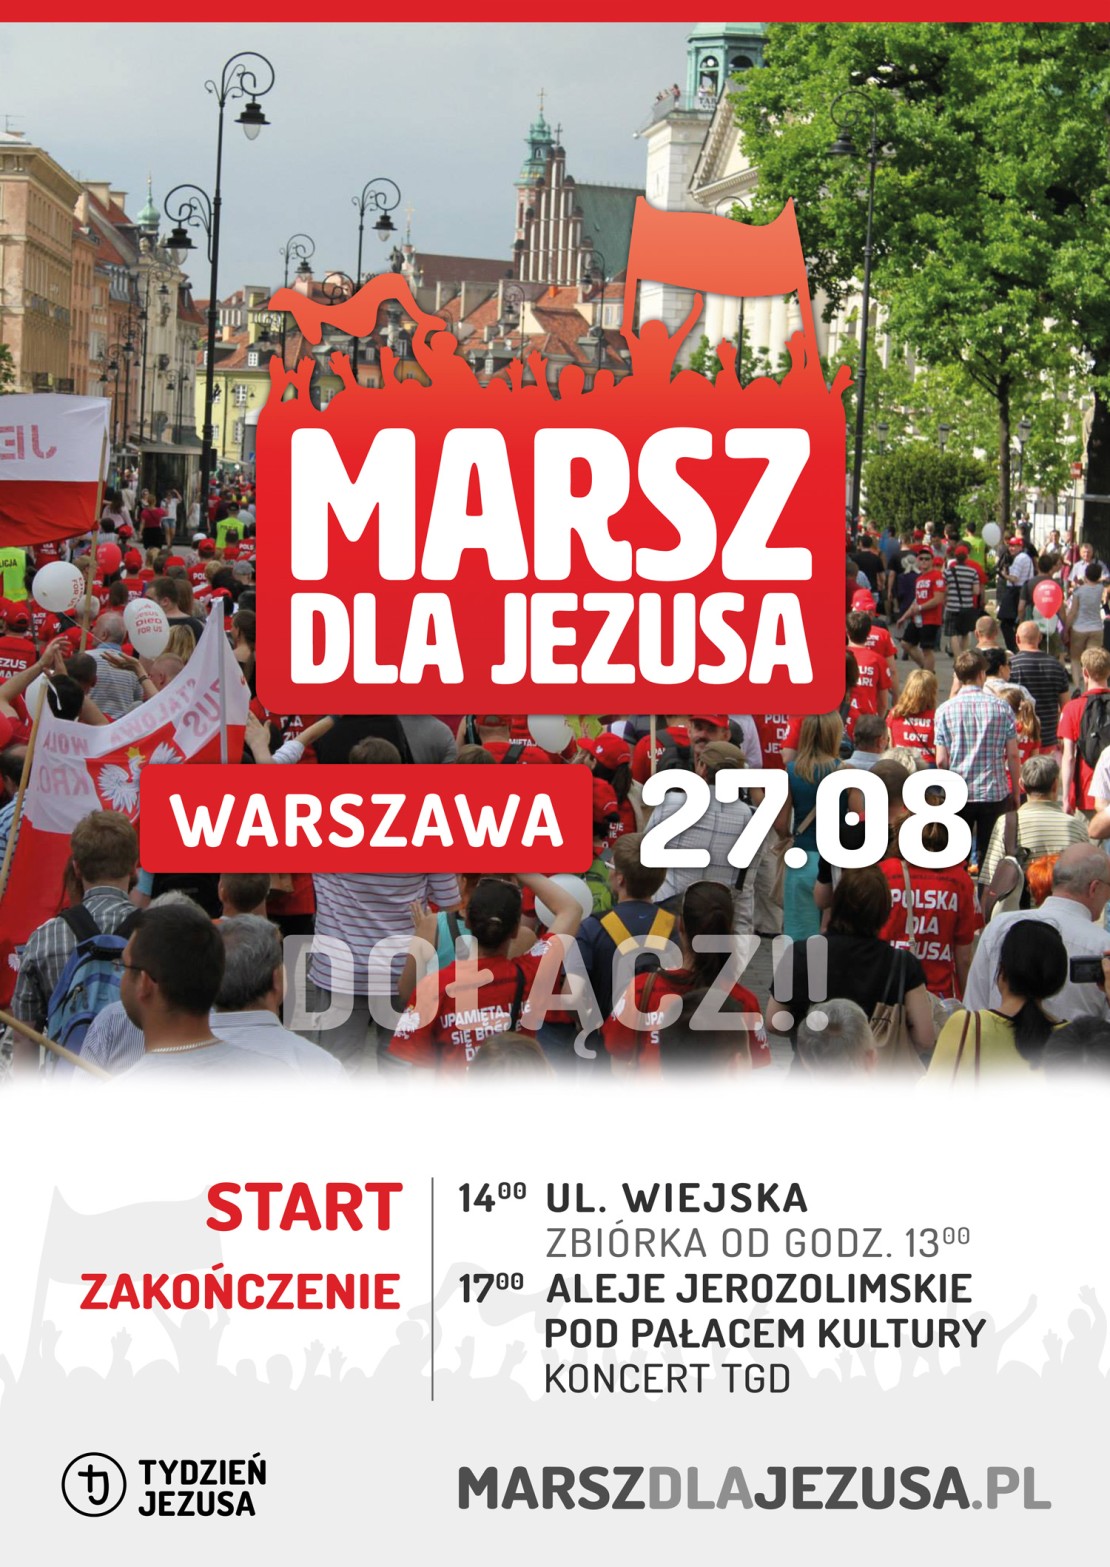 MarszDlaJezusa_plakat_Warszawa-2016m